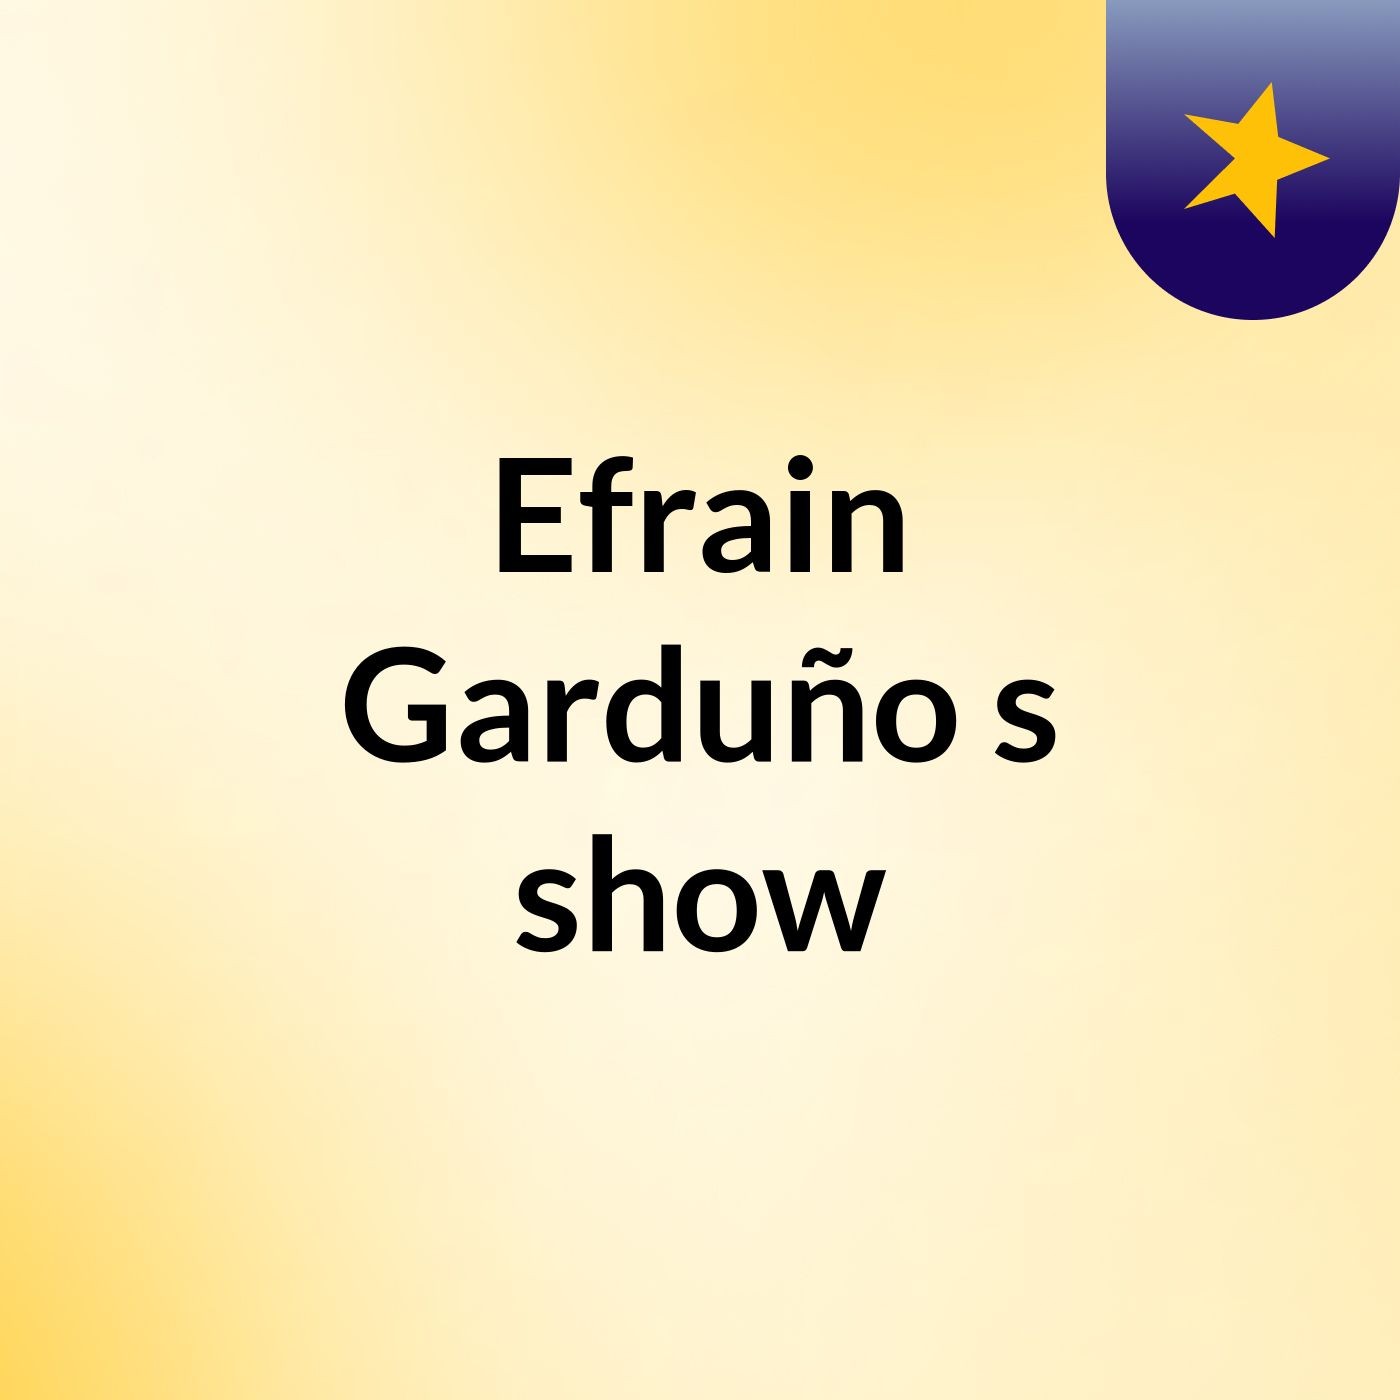 Efrain Garduño's show